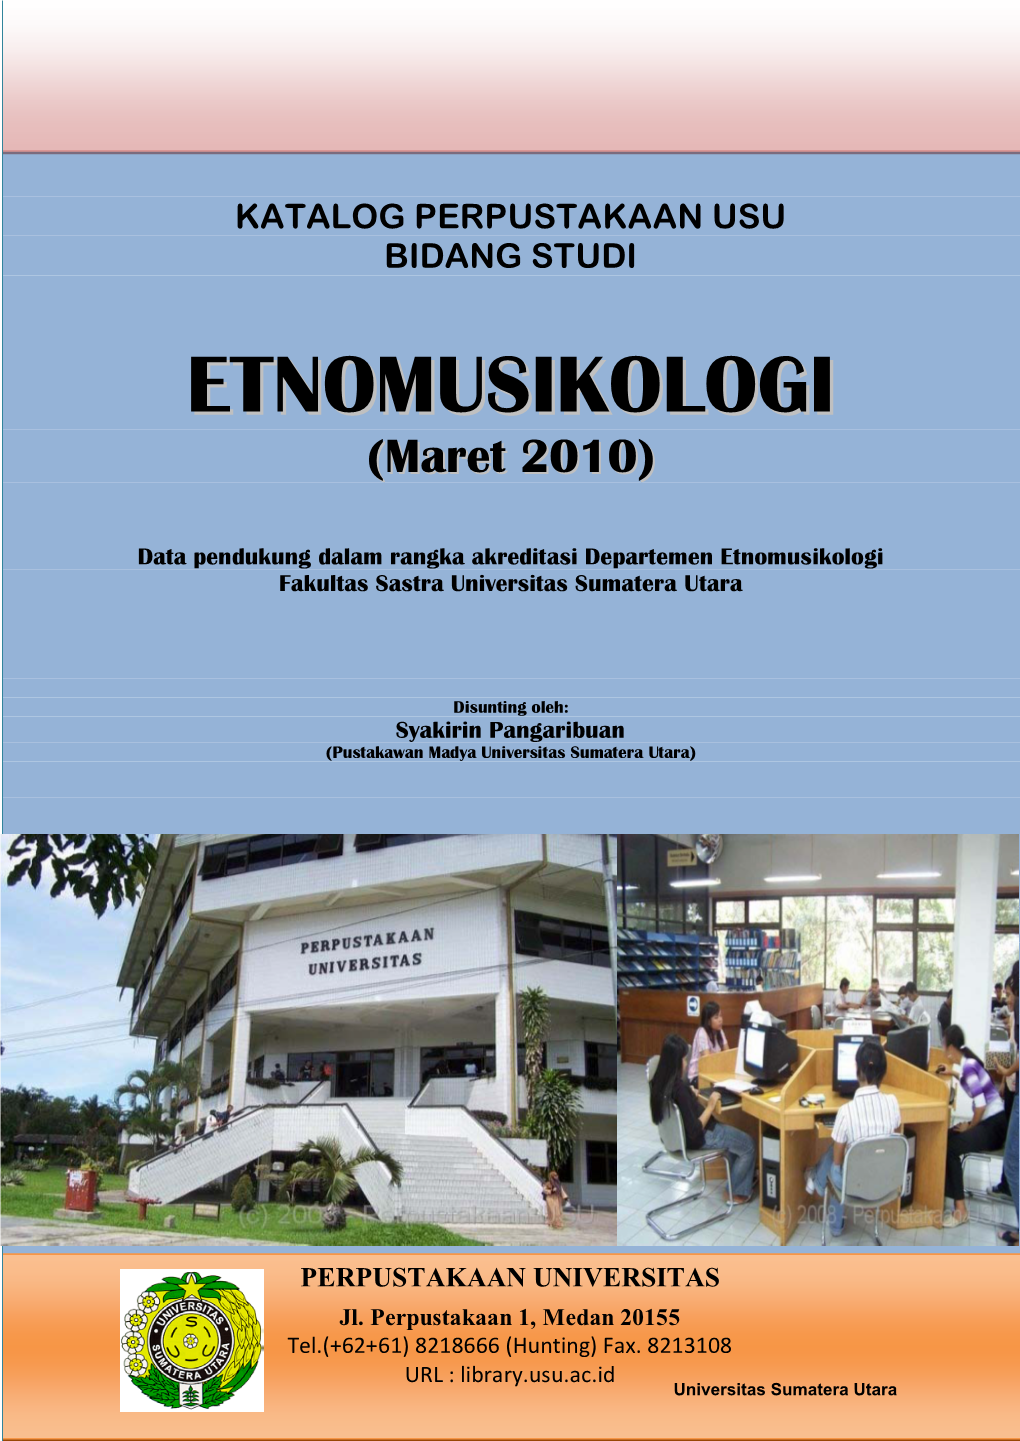 Etnomusikologi Fakultas Sastra Universitas Sumatera Utara